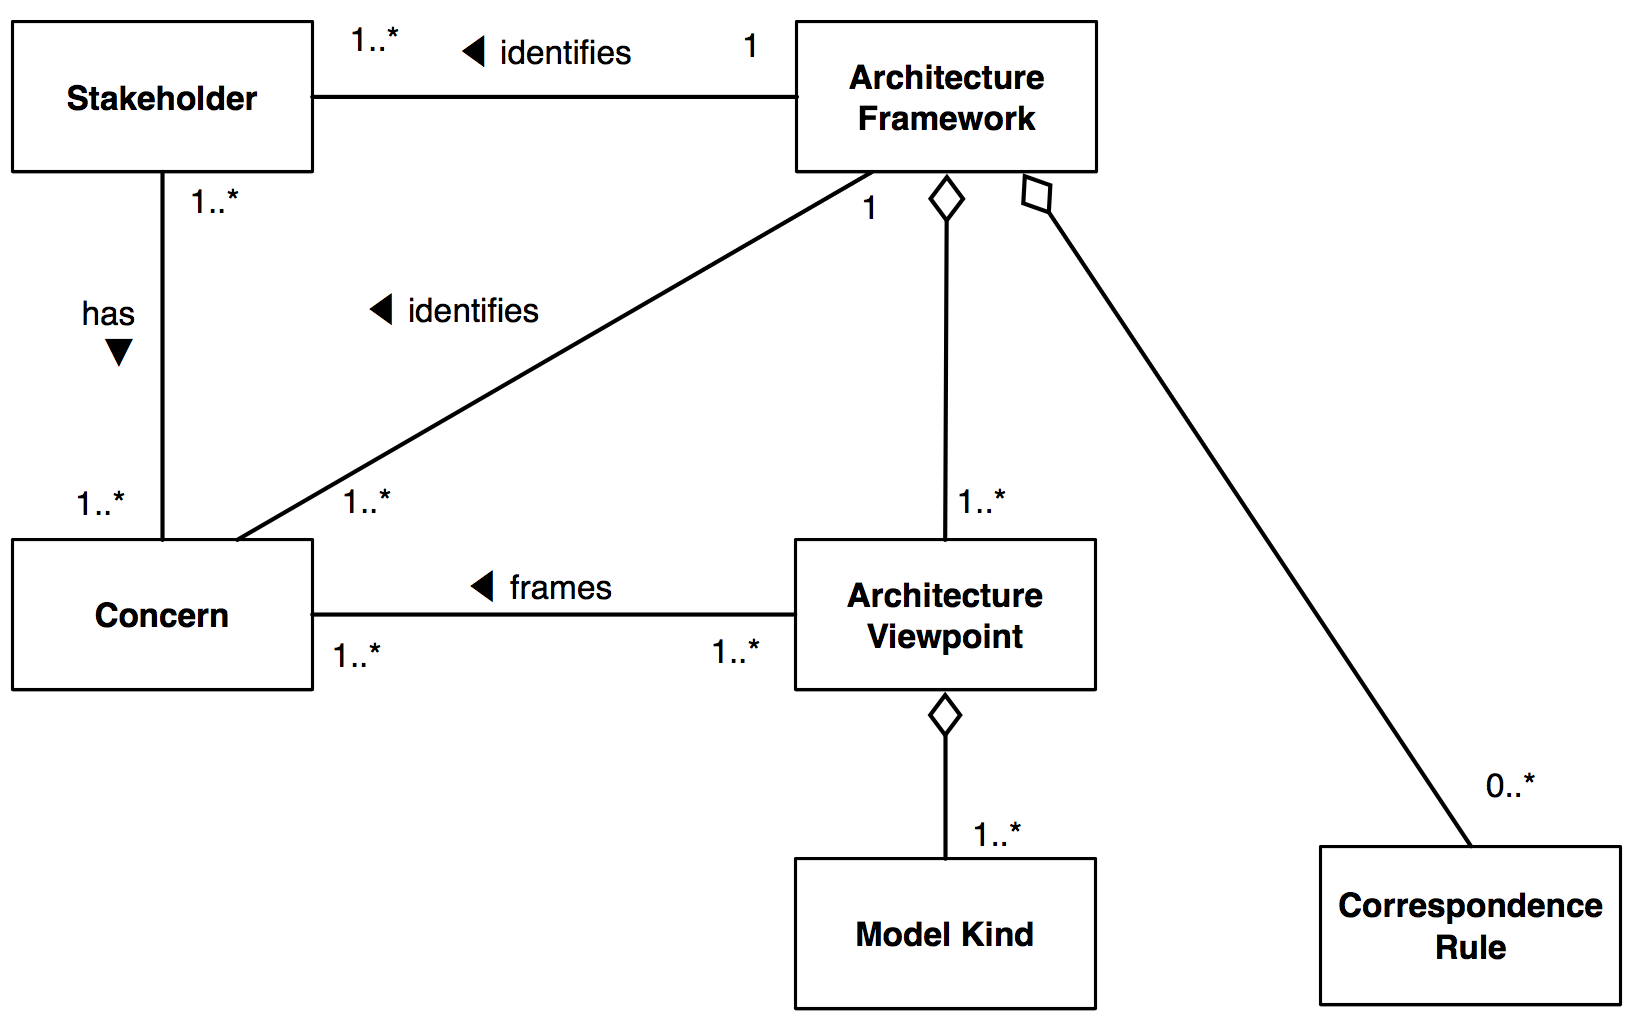 Architecture framework